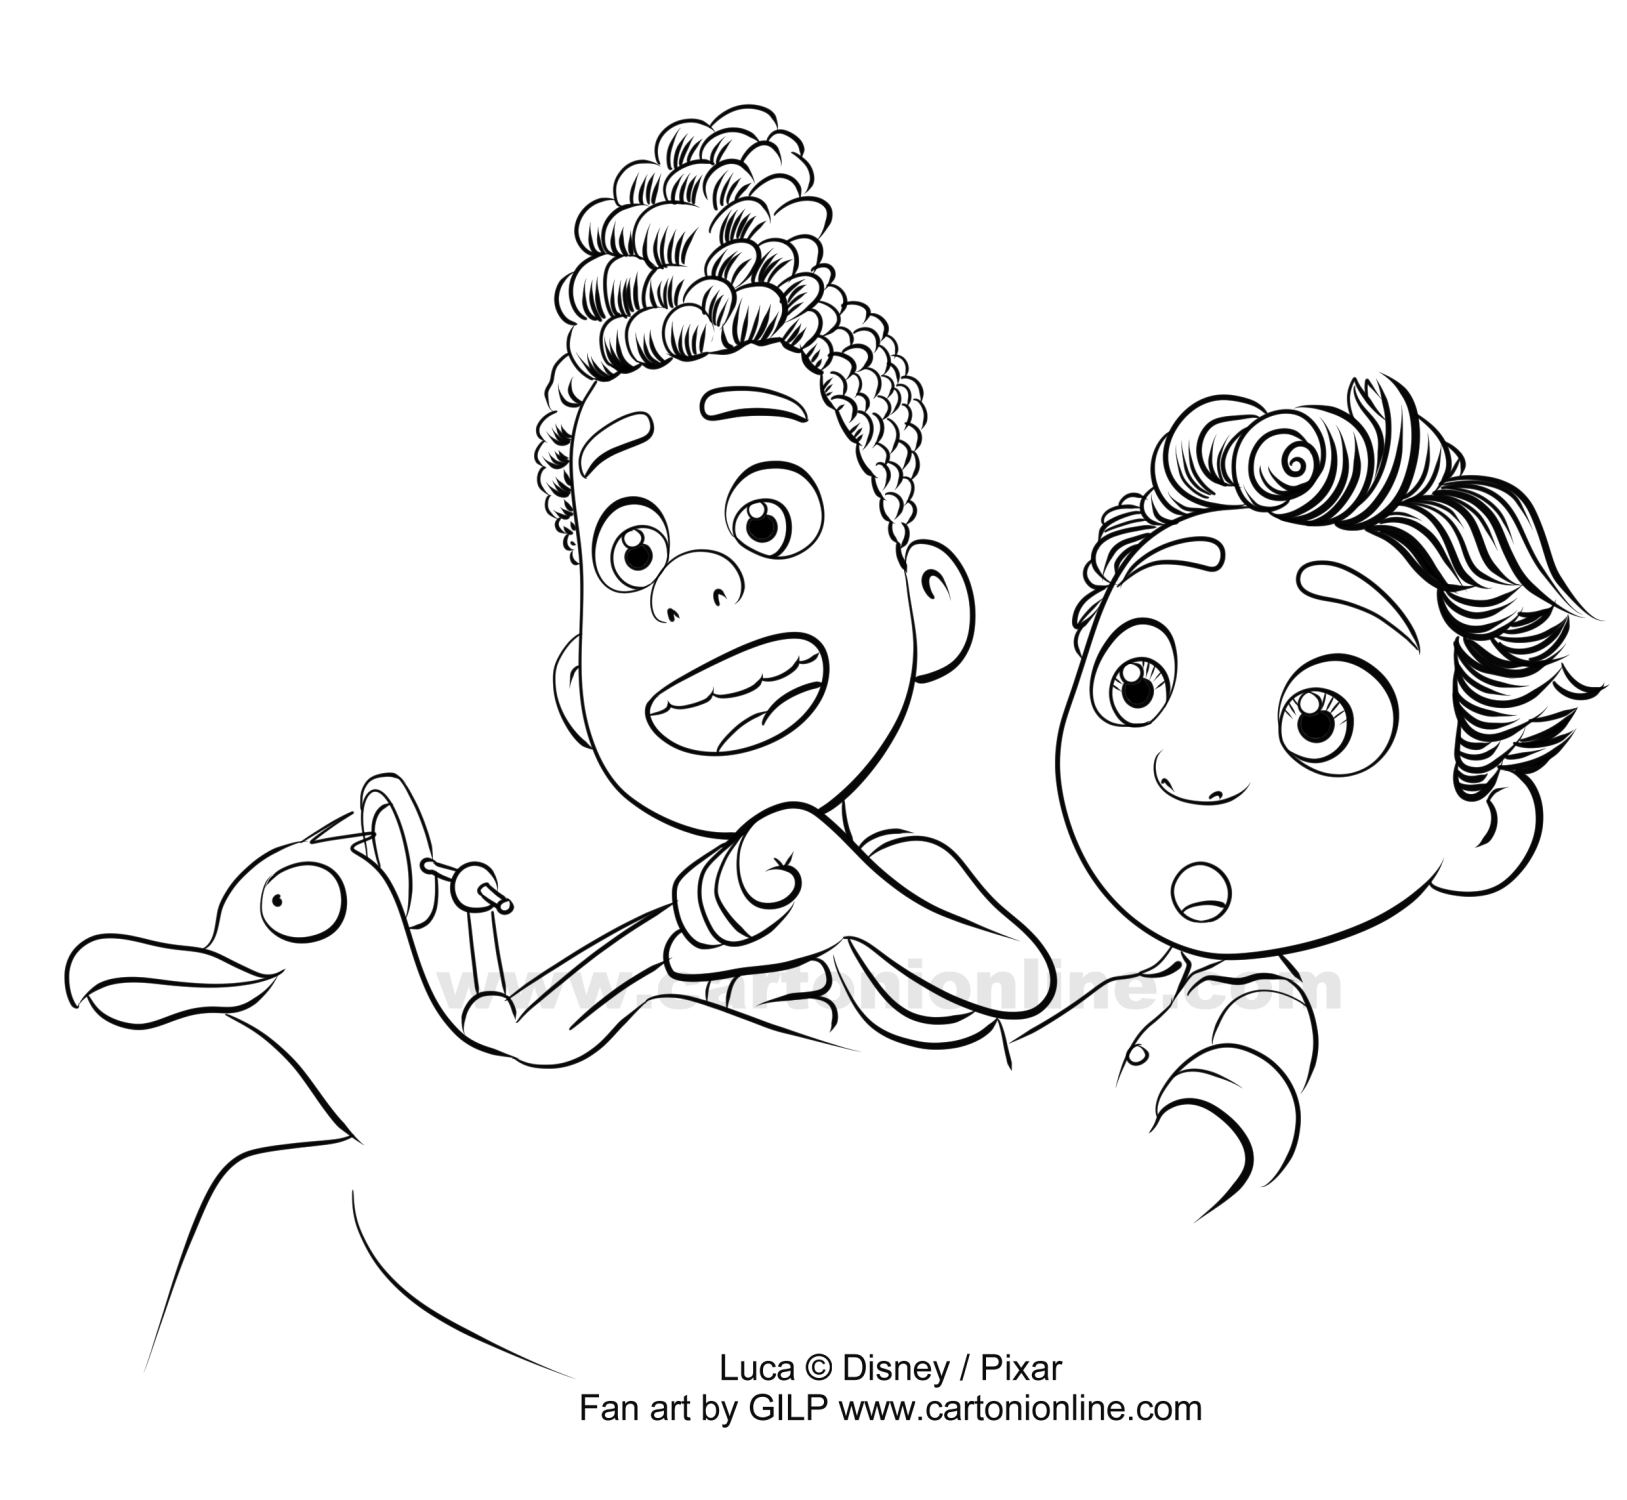 Desenho de Luca, Alberto de Luca (Disney/Pixar) para imprimir e colorir